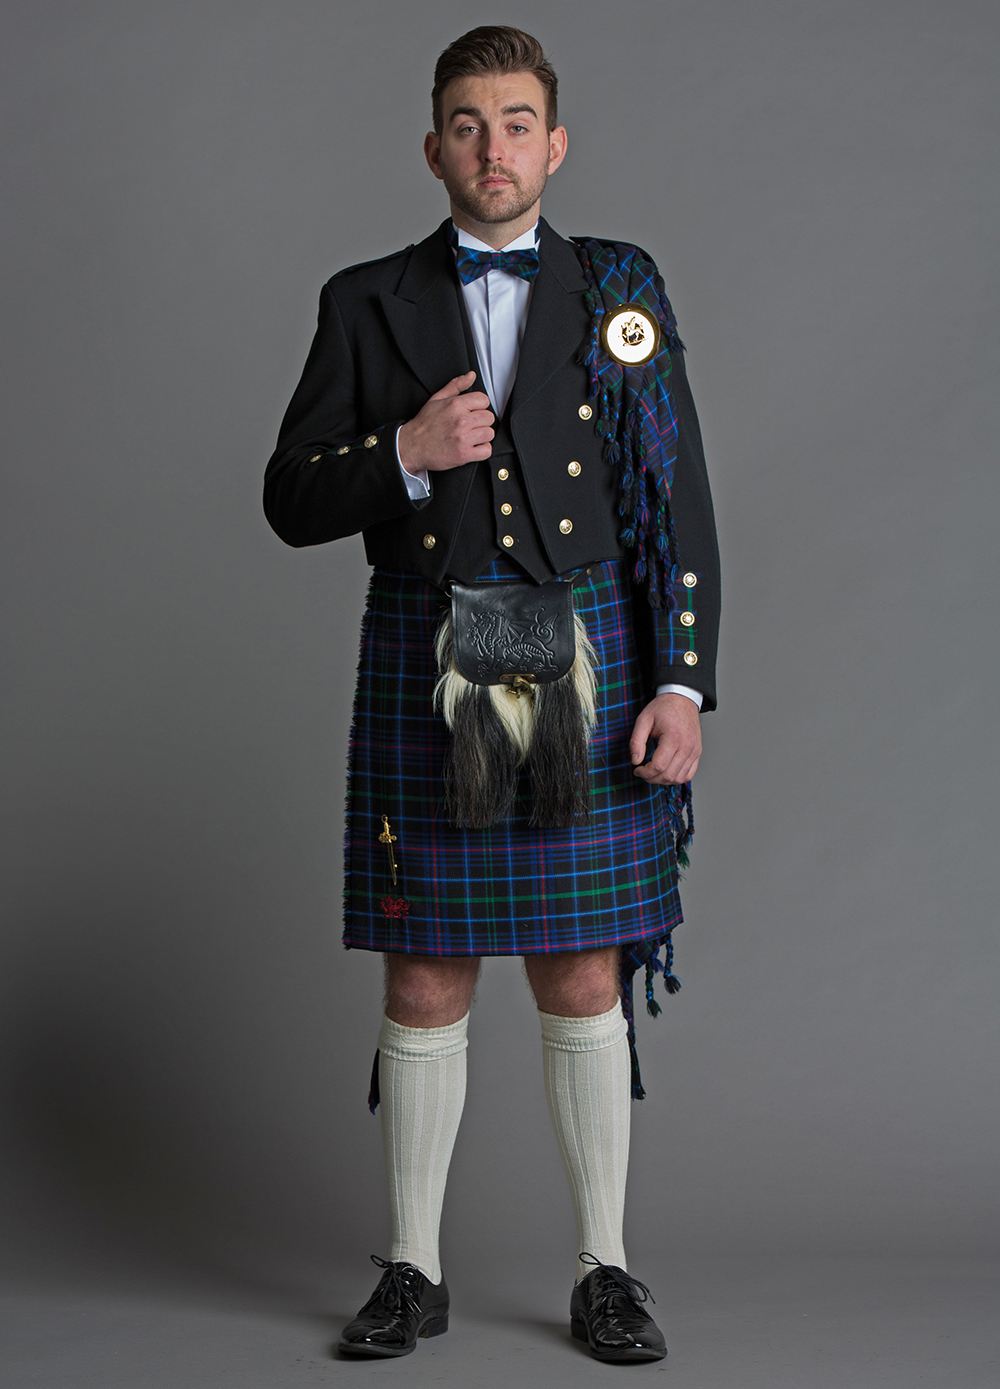 Suits  Kilt outfits, Men in kilts, Scottish fashion